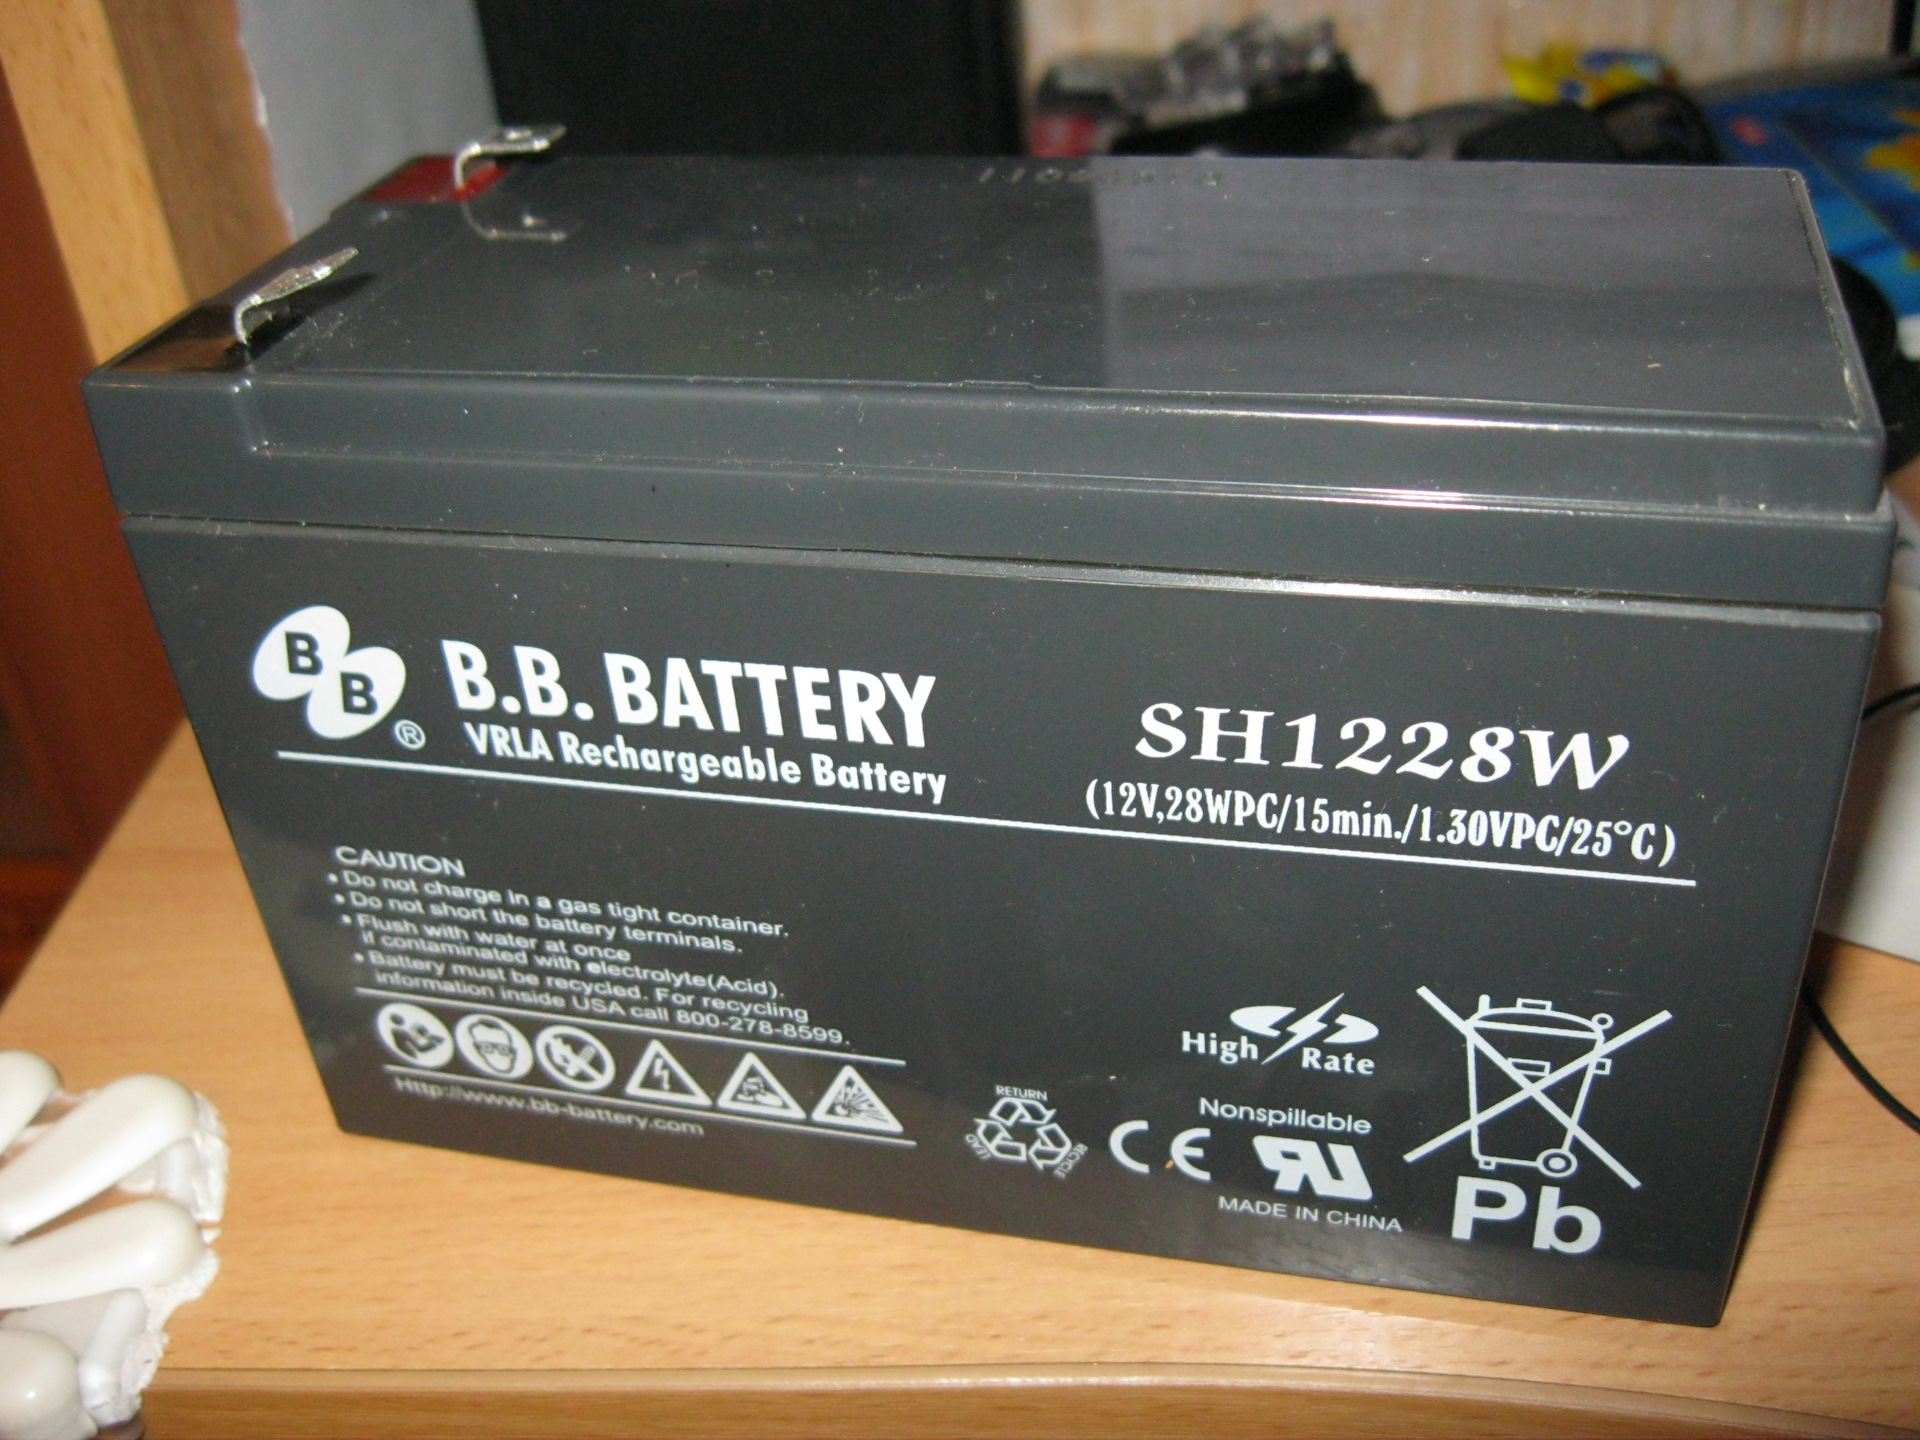 B b battery. Аккумулятор BB Battery sh1228w. Аккумулятор sh1228w 12v b.b.Battery 28wpc/15min/1.0VPC/25. Аккумулятор b.b. Battery sh1228w s. Sh1228w аккумулятор для ИБП.